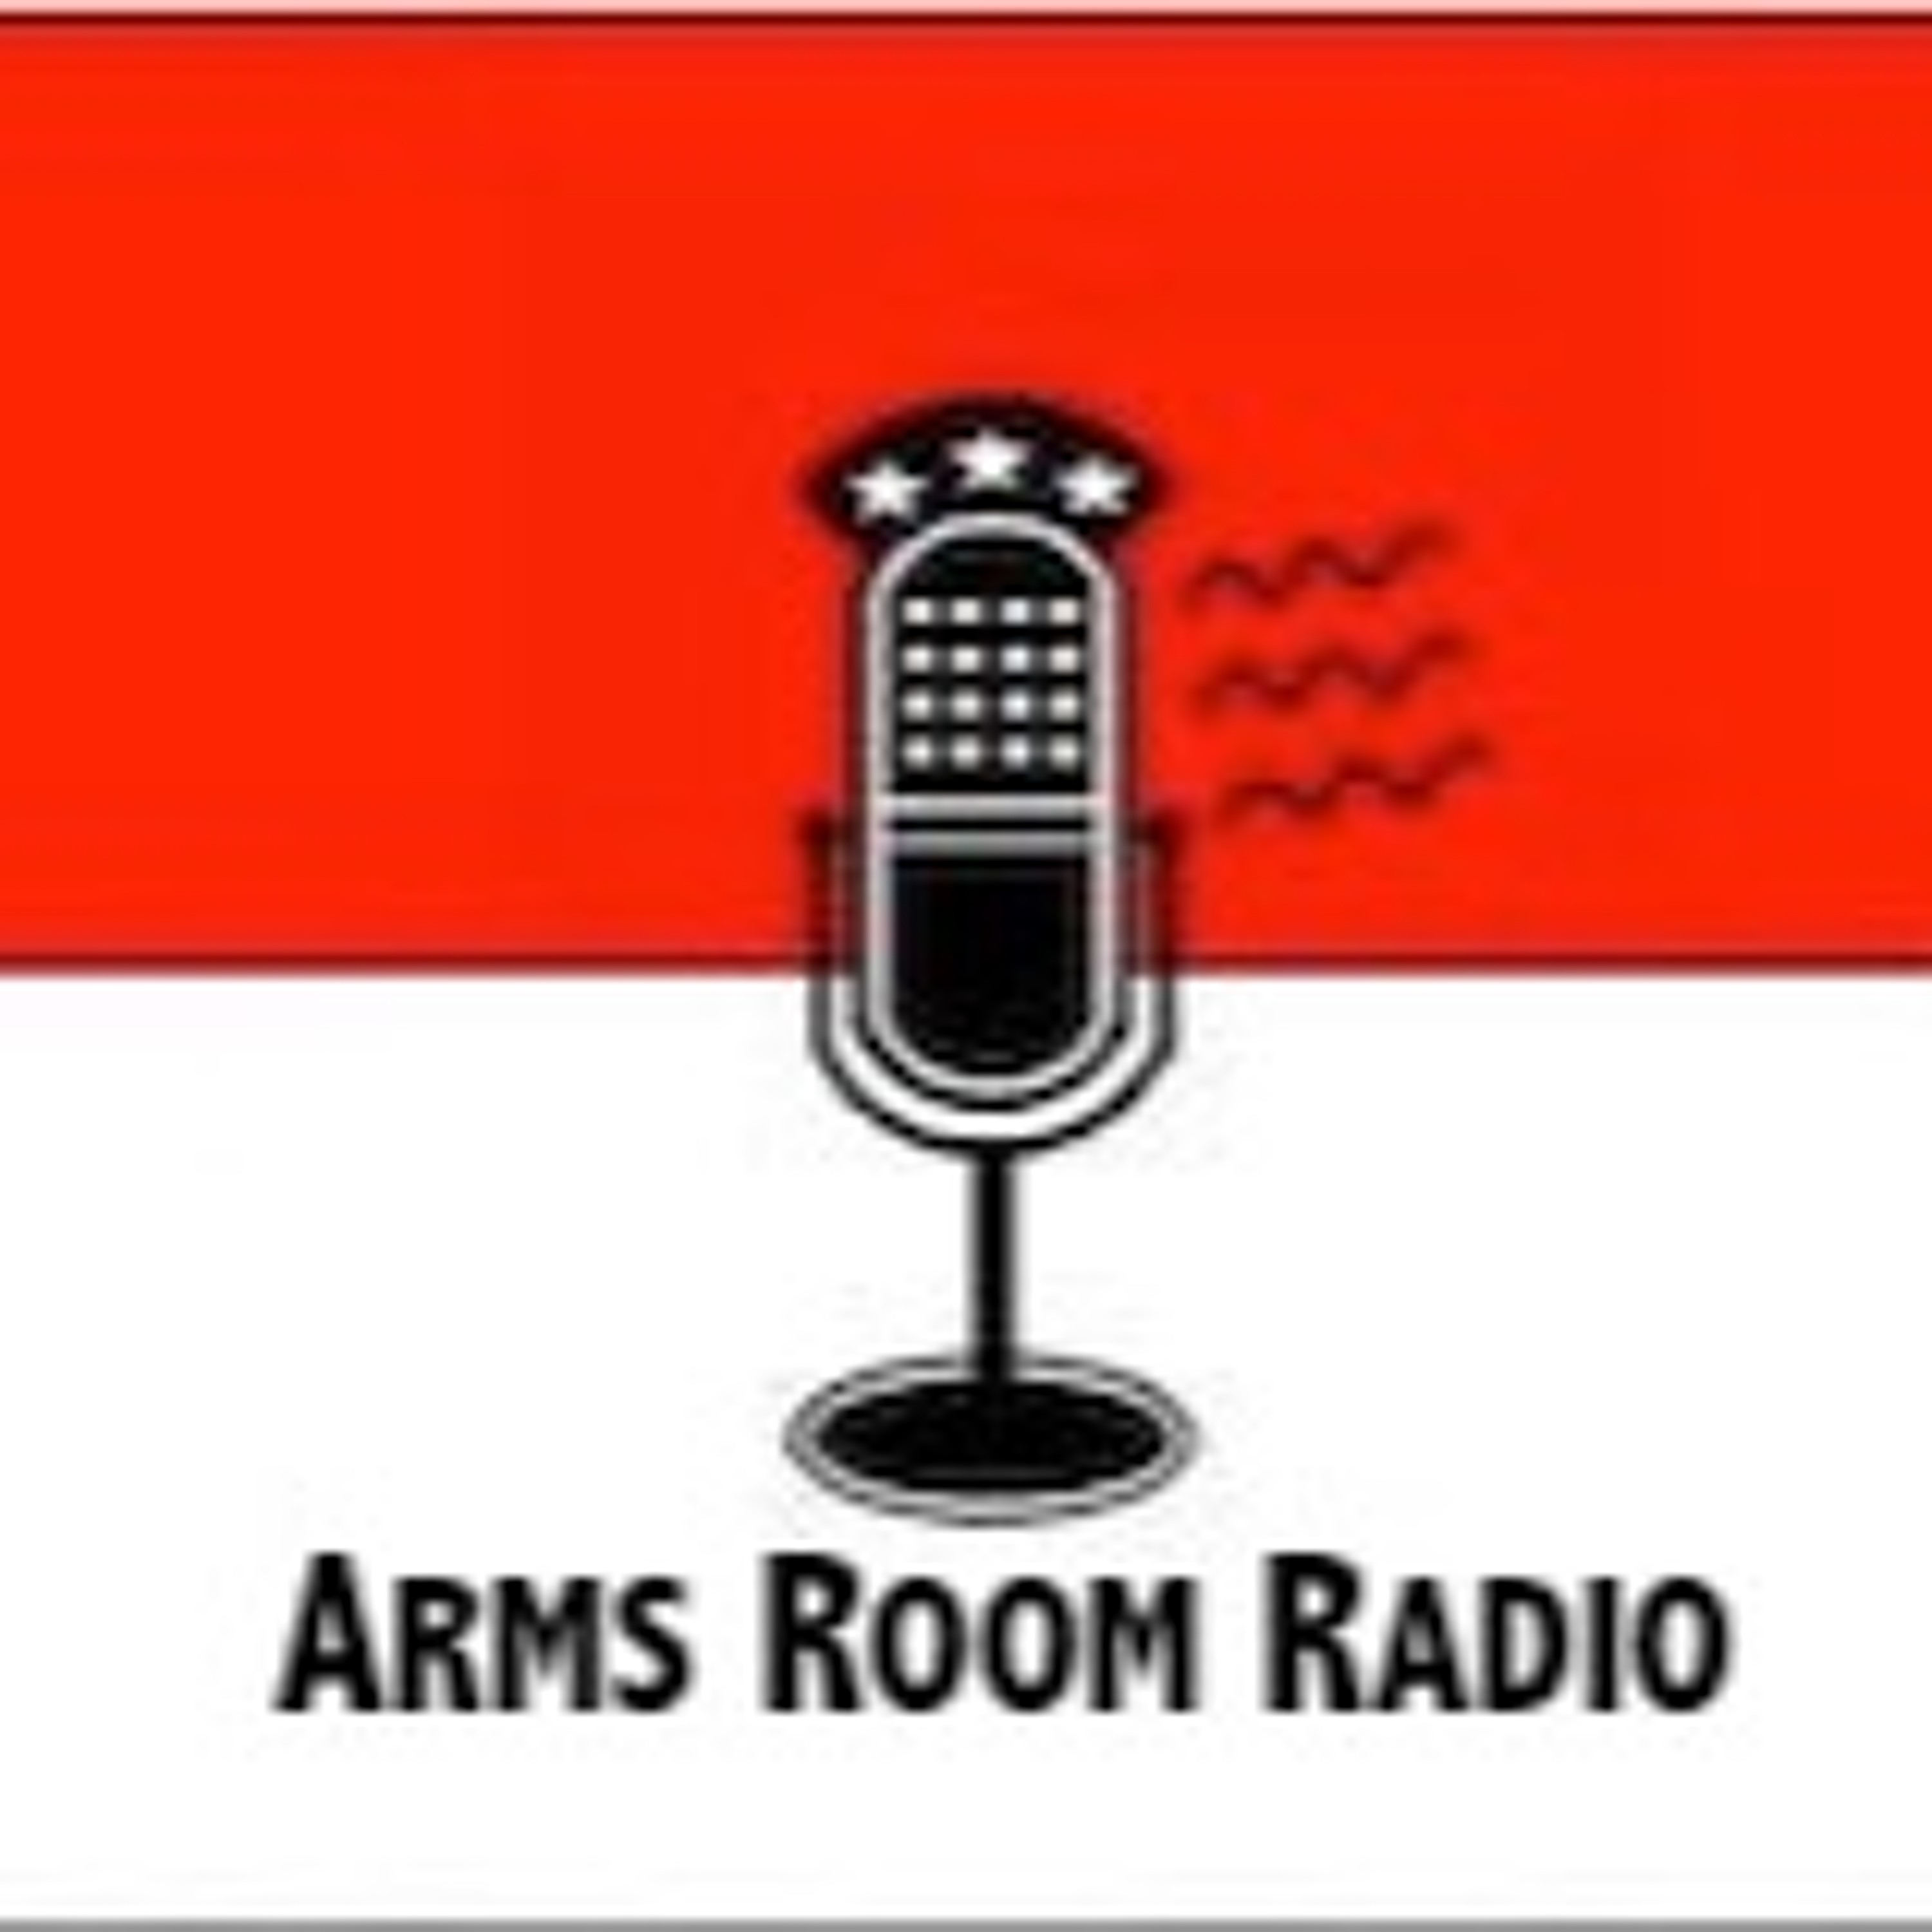 ArmsRoomRadio 12.21.19 Christmas Shopping, Craig DeLuz